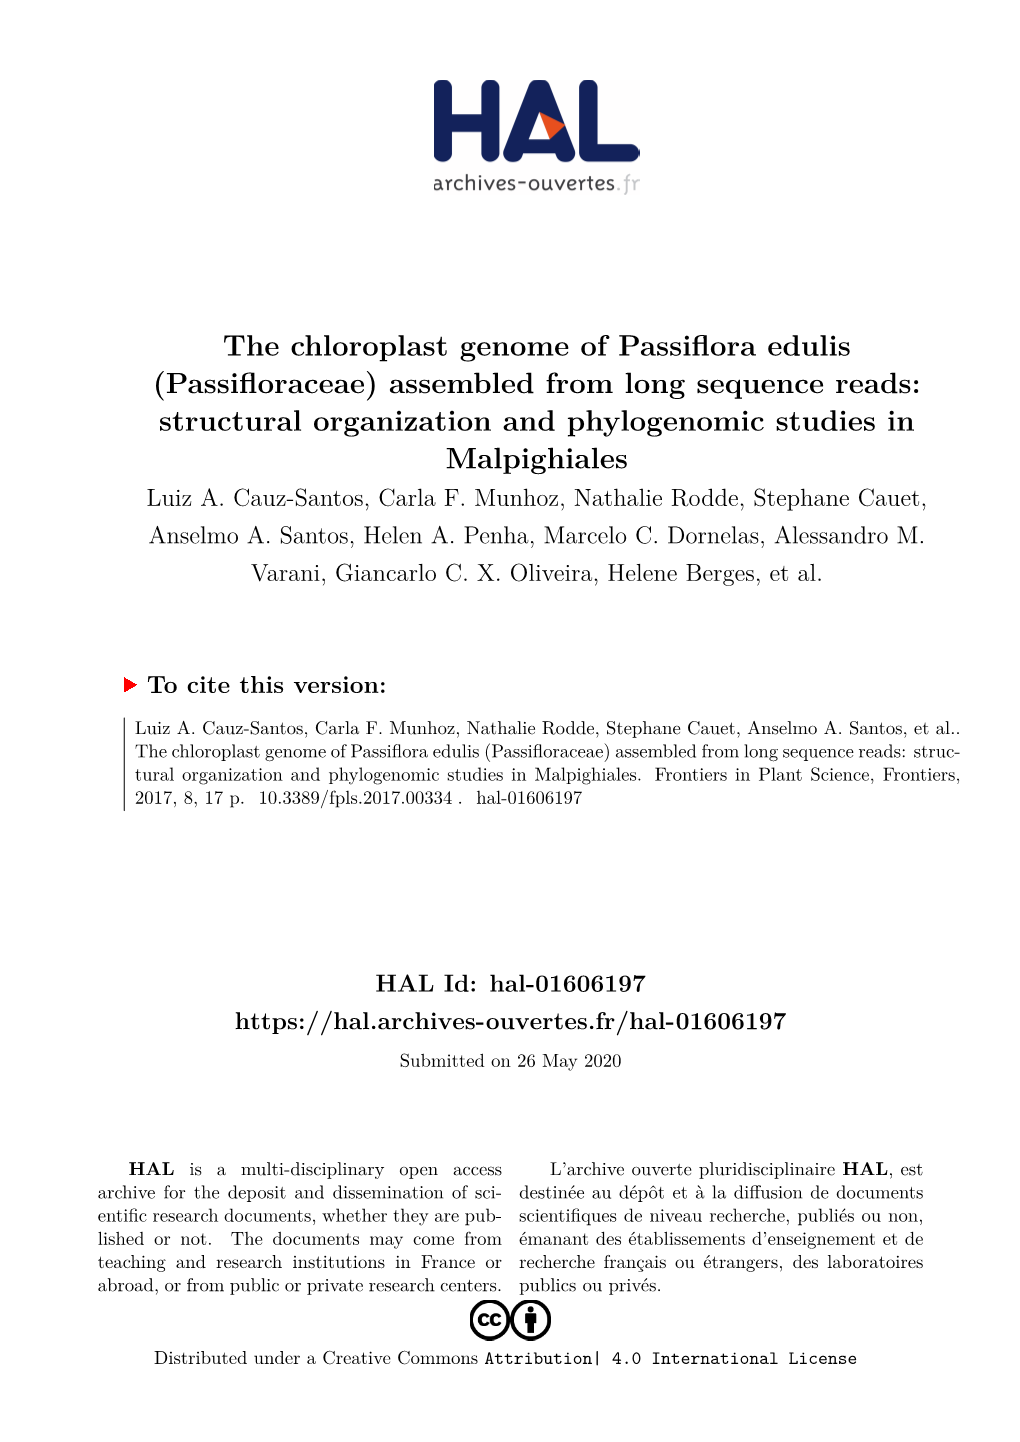 The Chloroplast Genome of Passiflora Edulis (Passifloraceae)